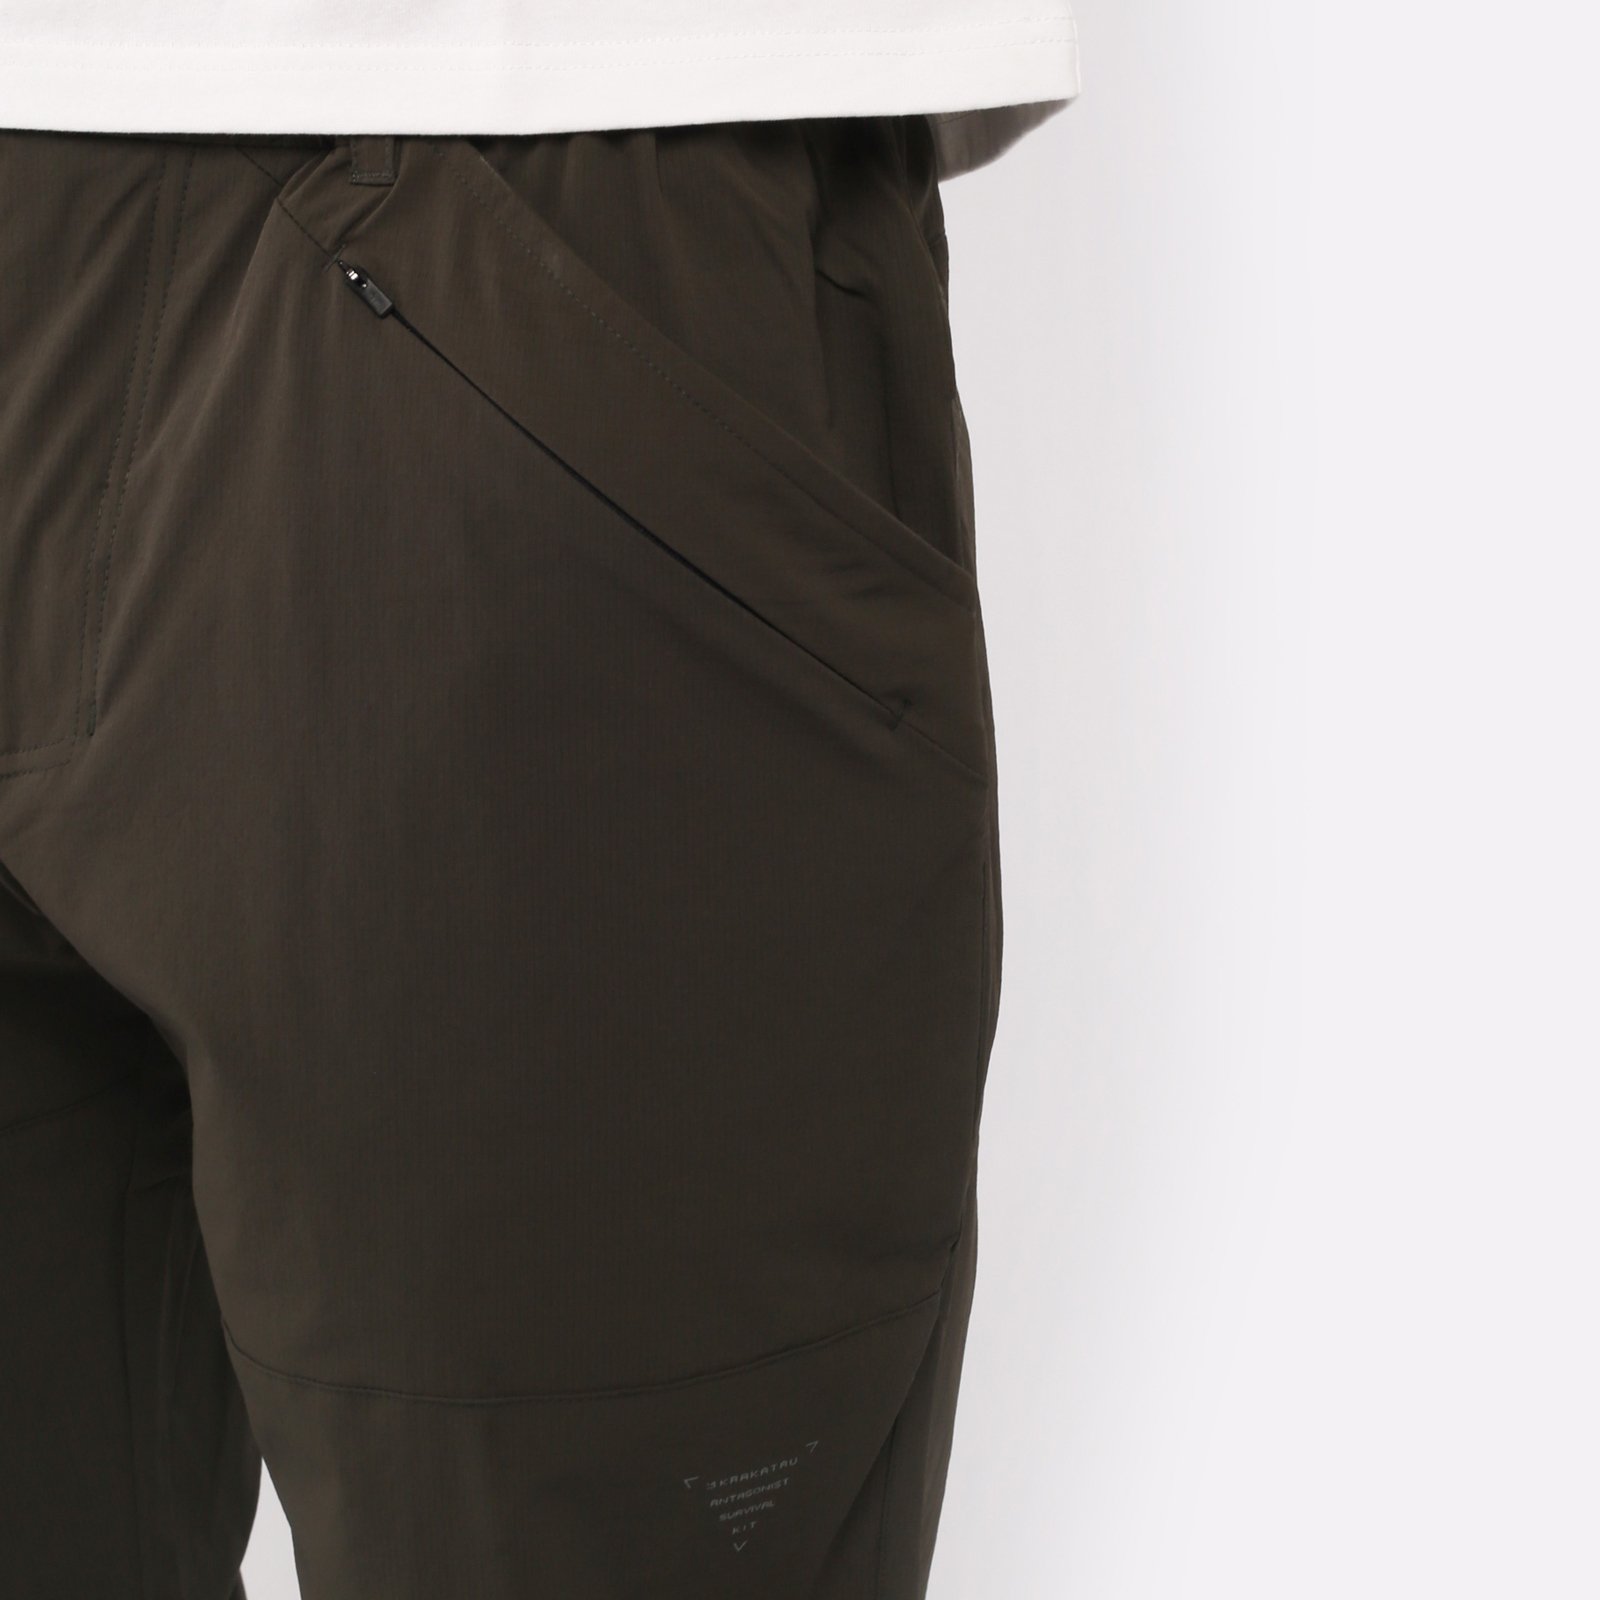 мужские зеленые брюки KRAKATAU Rm180-5 Rm180-5-тем-зел - цена, описание, фото 4